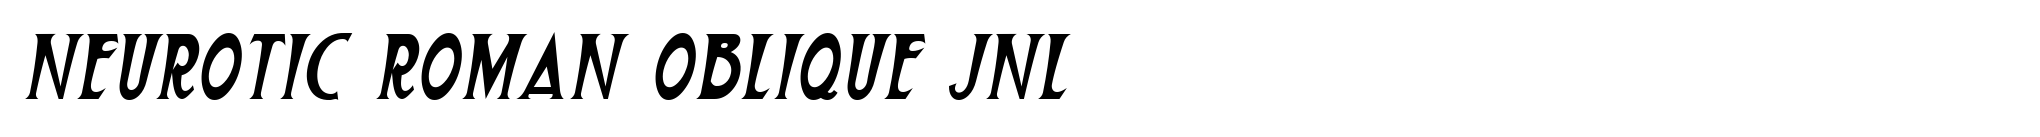 Neurotic Roman Oblique JNL image